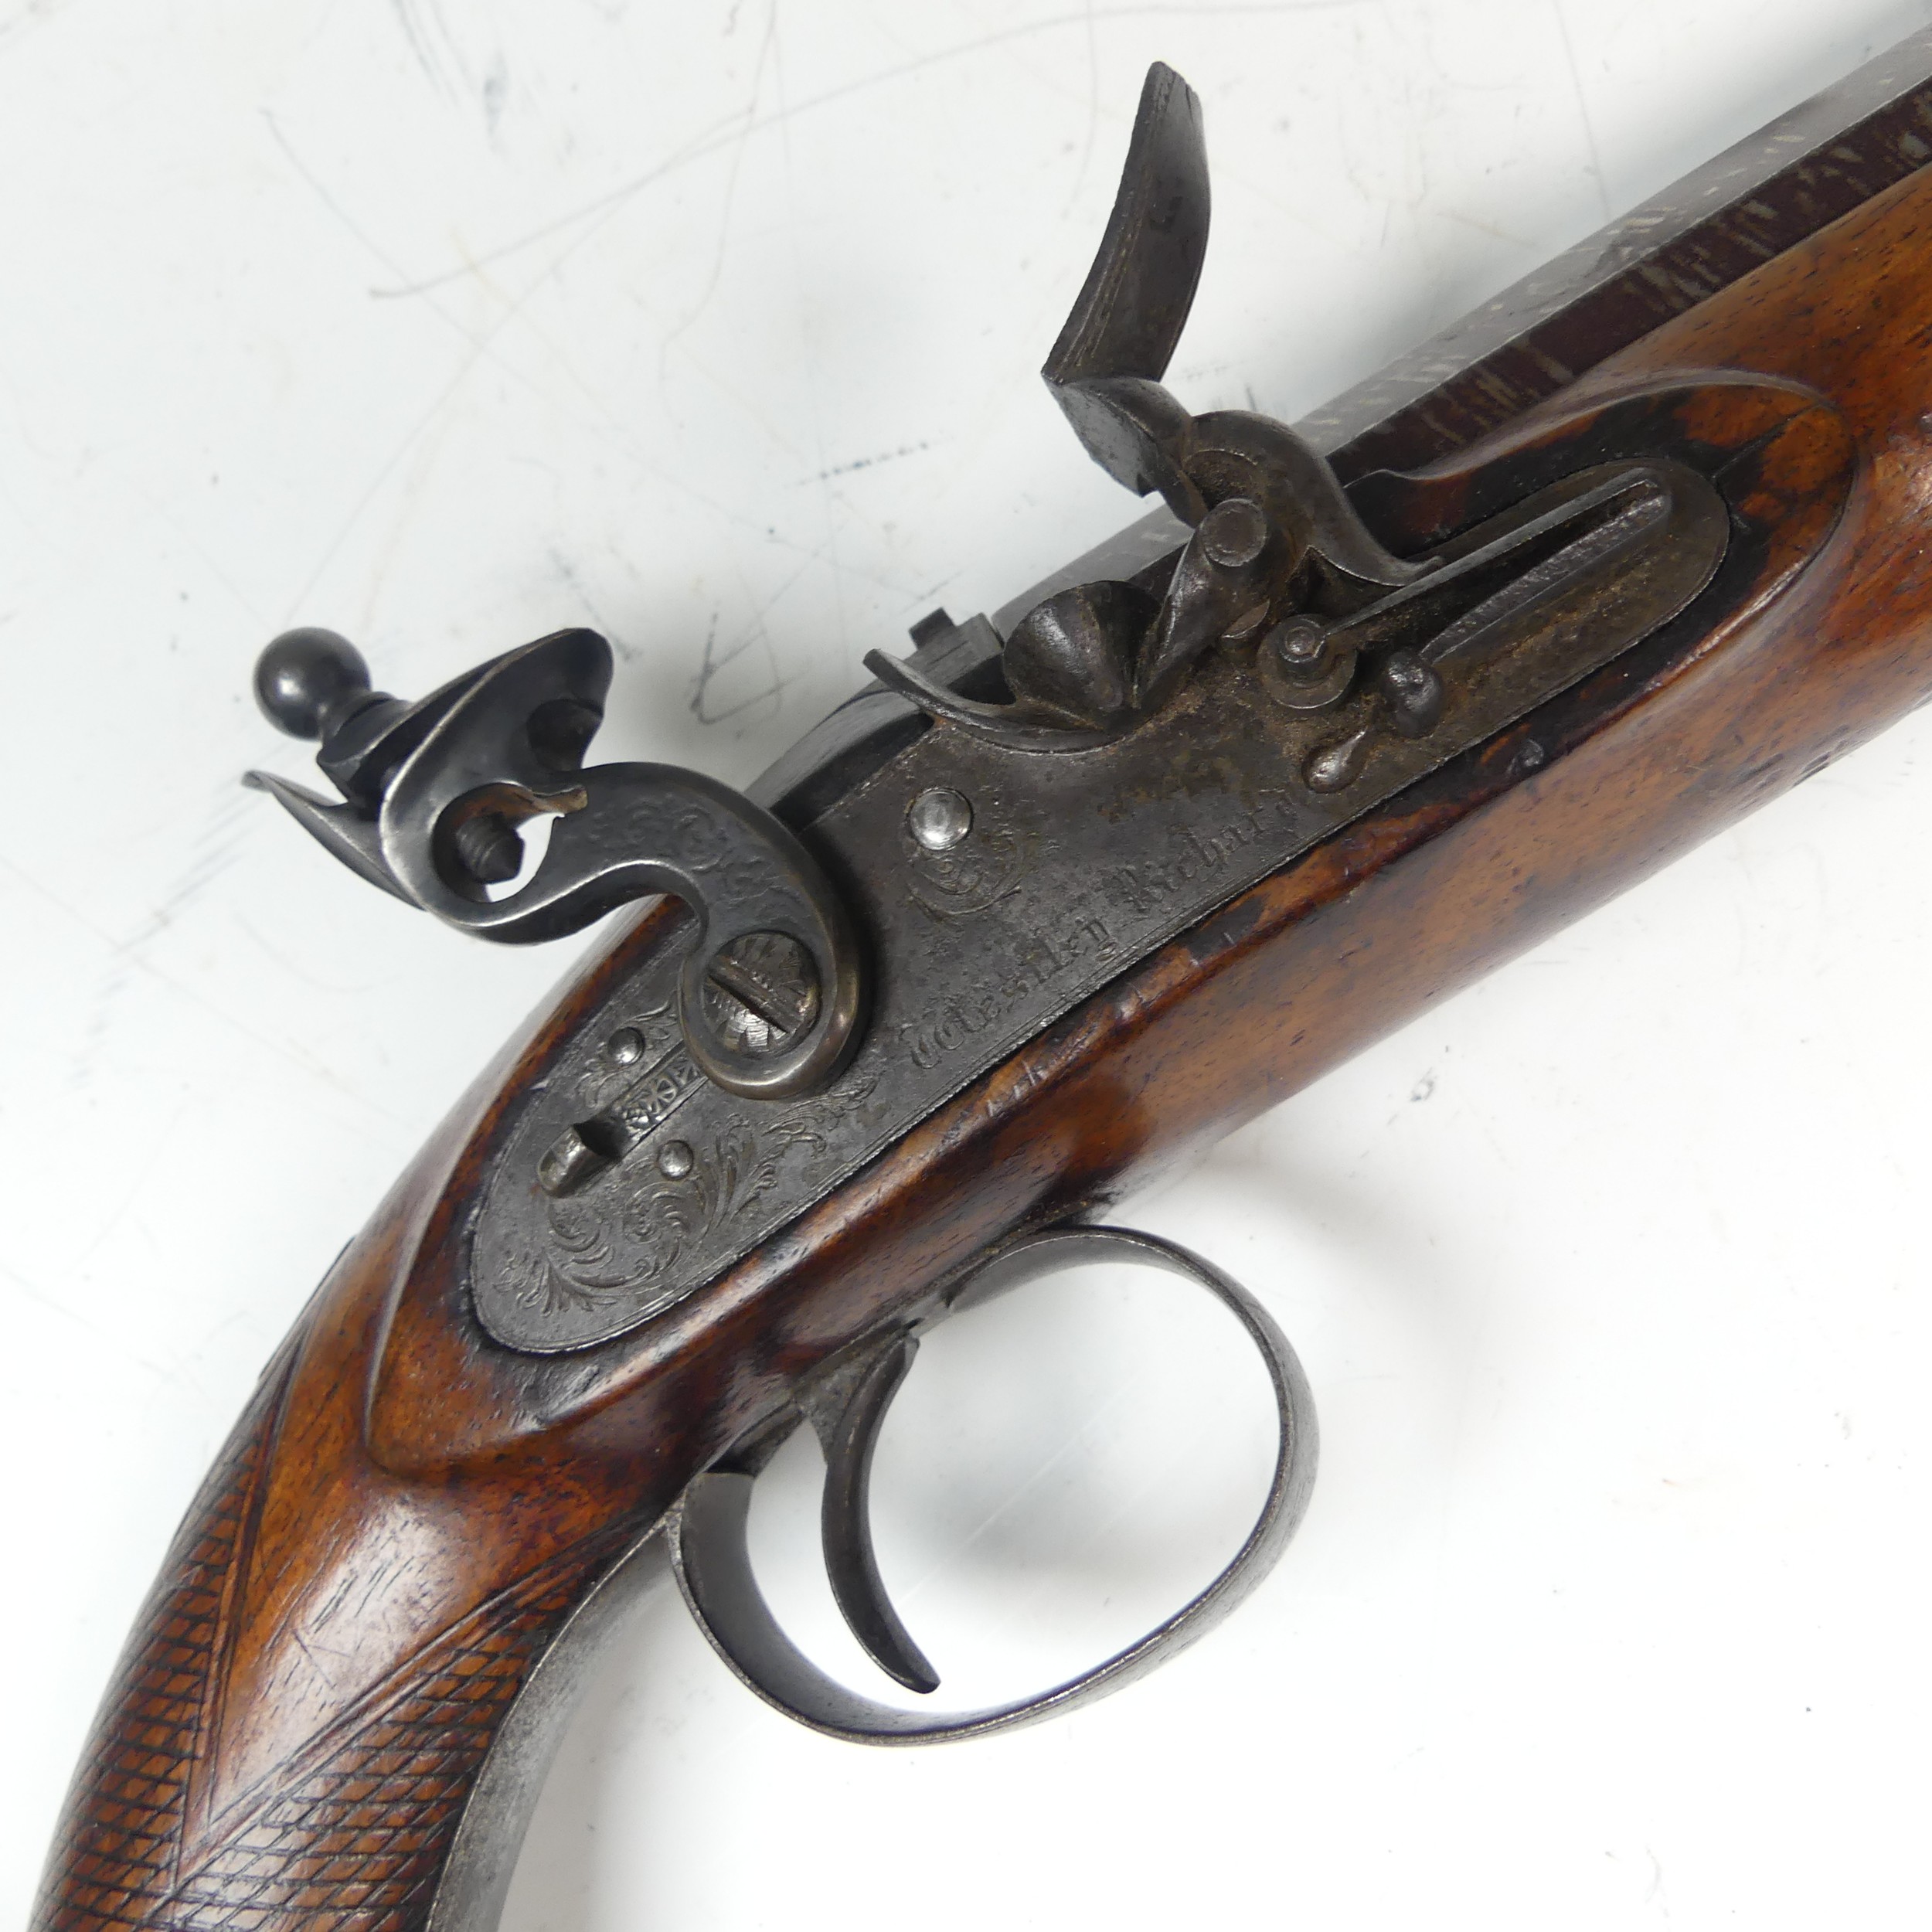 A Westley Richards flintlock Pistol, 8'' octagonal barrel inscribed "Westley Richards", with